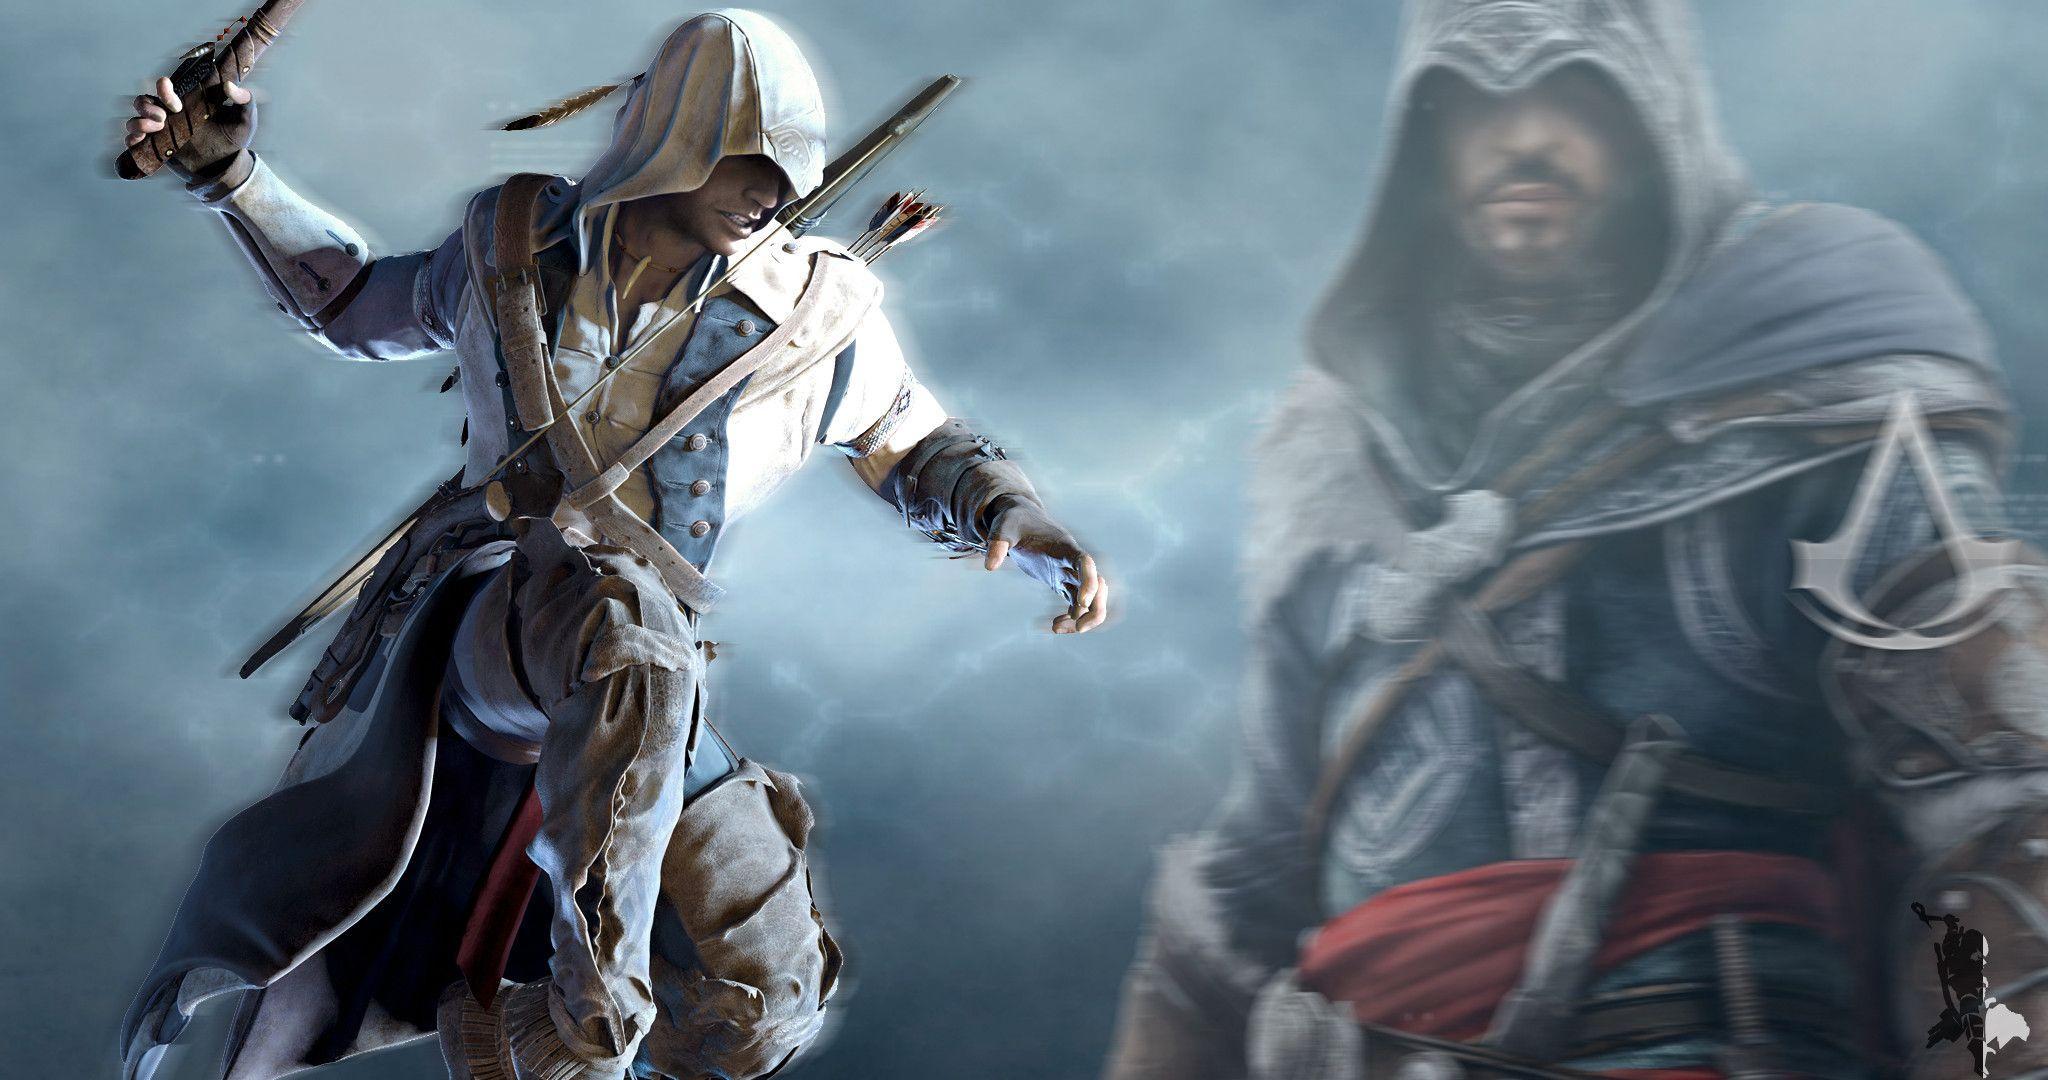 Wallpaper On Assassins Creed Fans